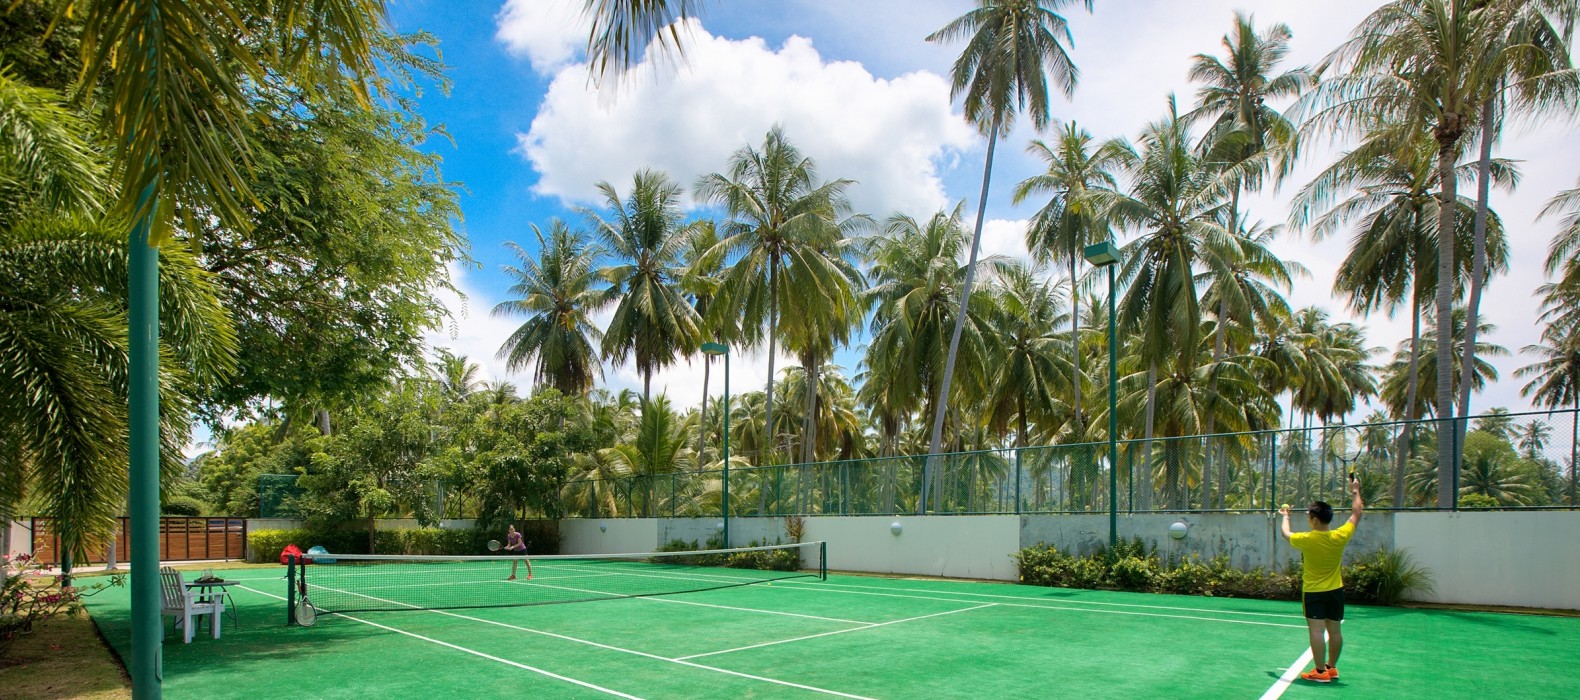 Tennis court of Villa La Guna in Koh Samui